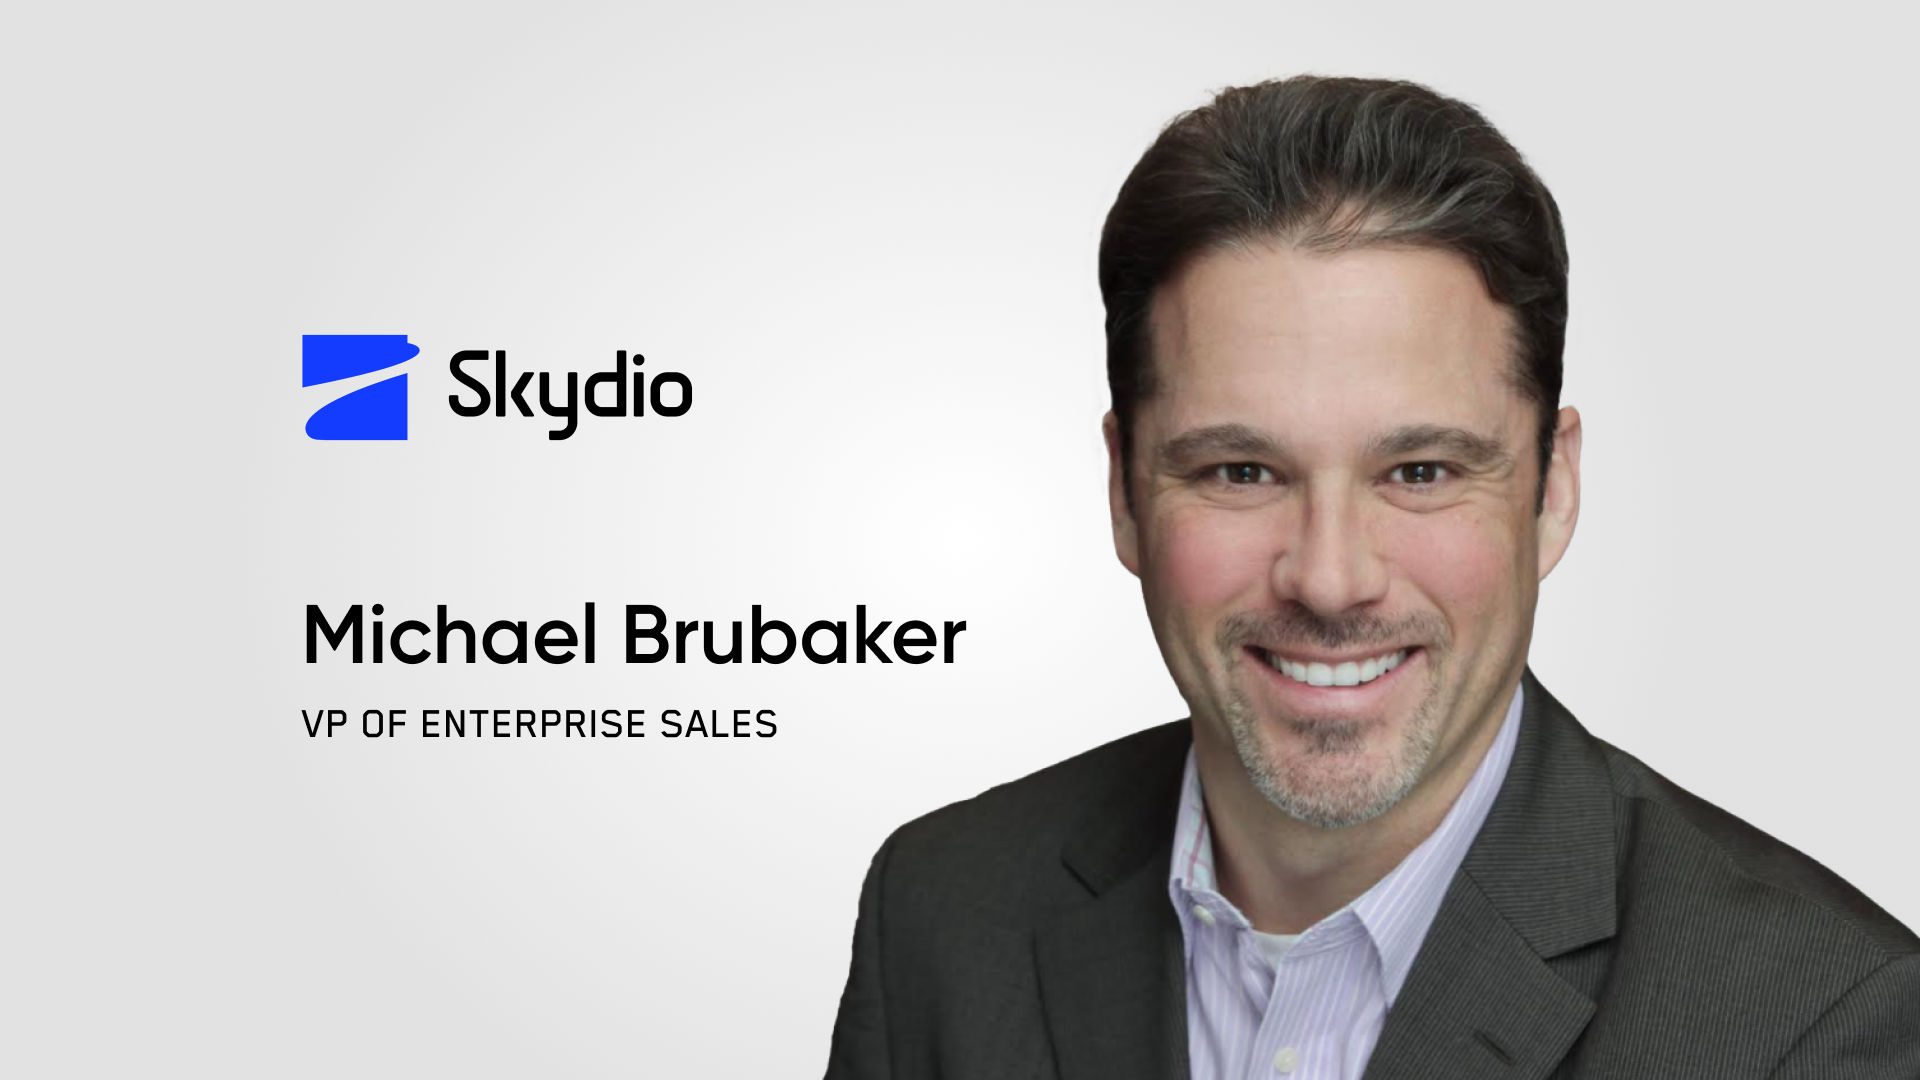 Skydio VP of Enterprise Sales, Michael Brubaker